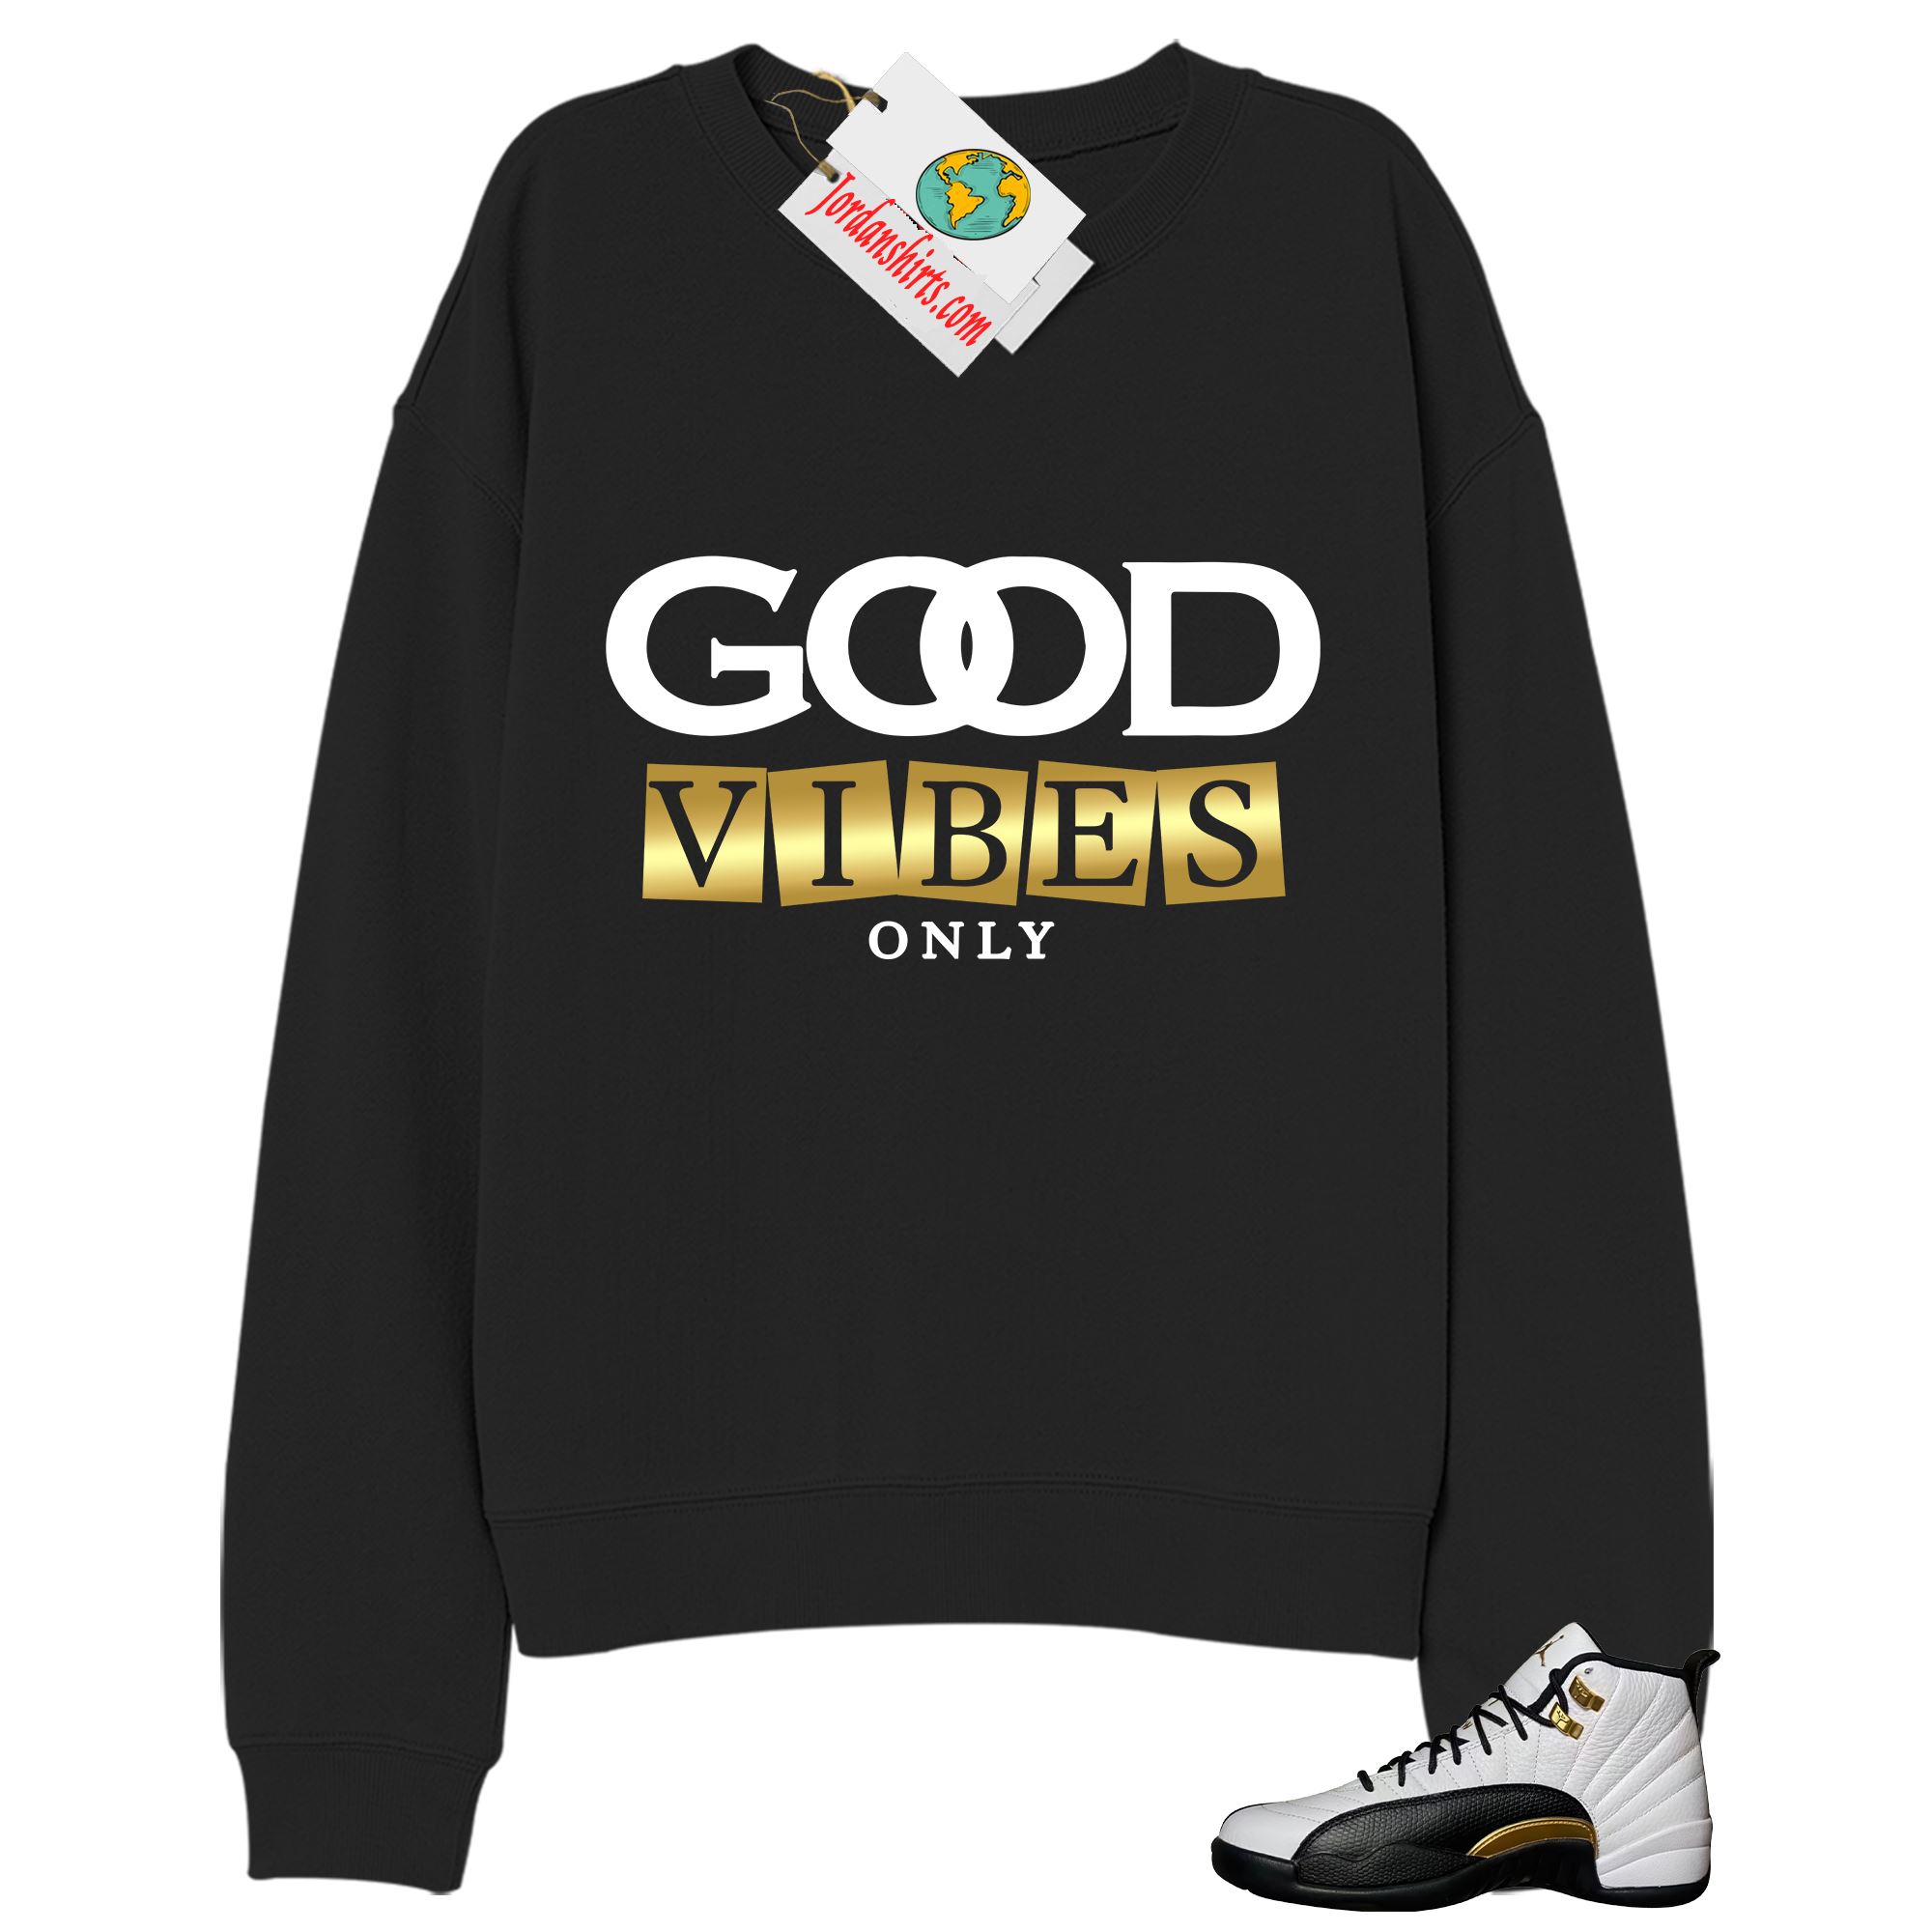 Jordan 12 Sweatshirt, Good Vibes Only Black Sweatshirt Air Jordan 12 Royalty 12s Plus Size Up To 5xl